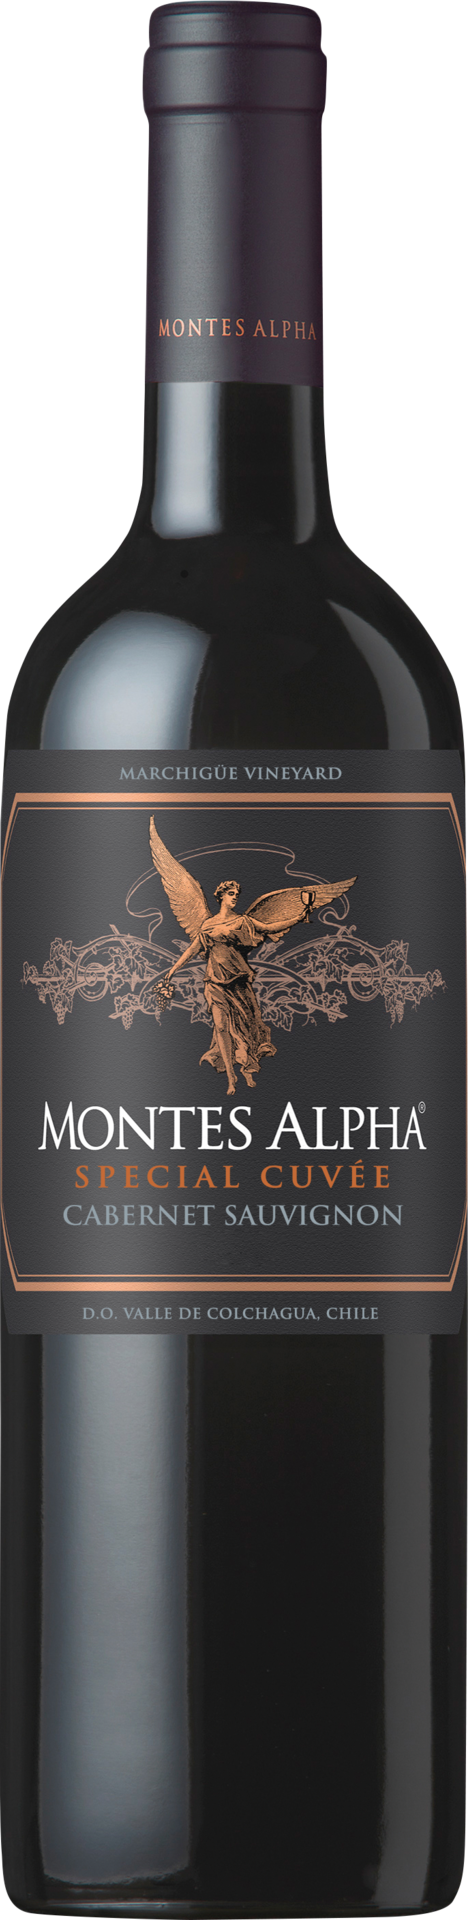 Montes Alpha Special Cuvee Cabernet Sauvignon 